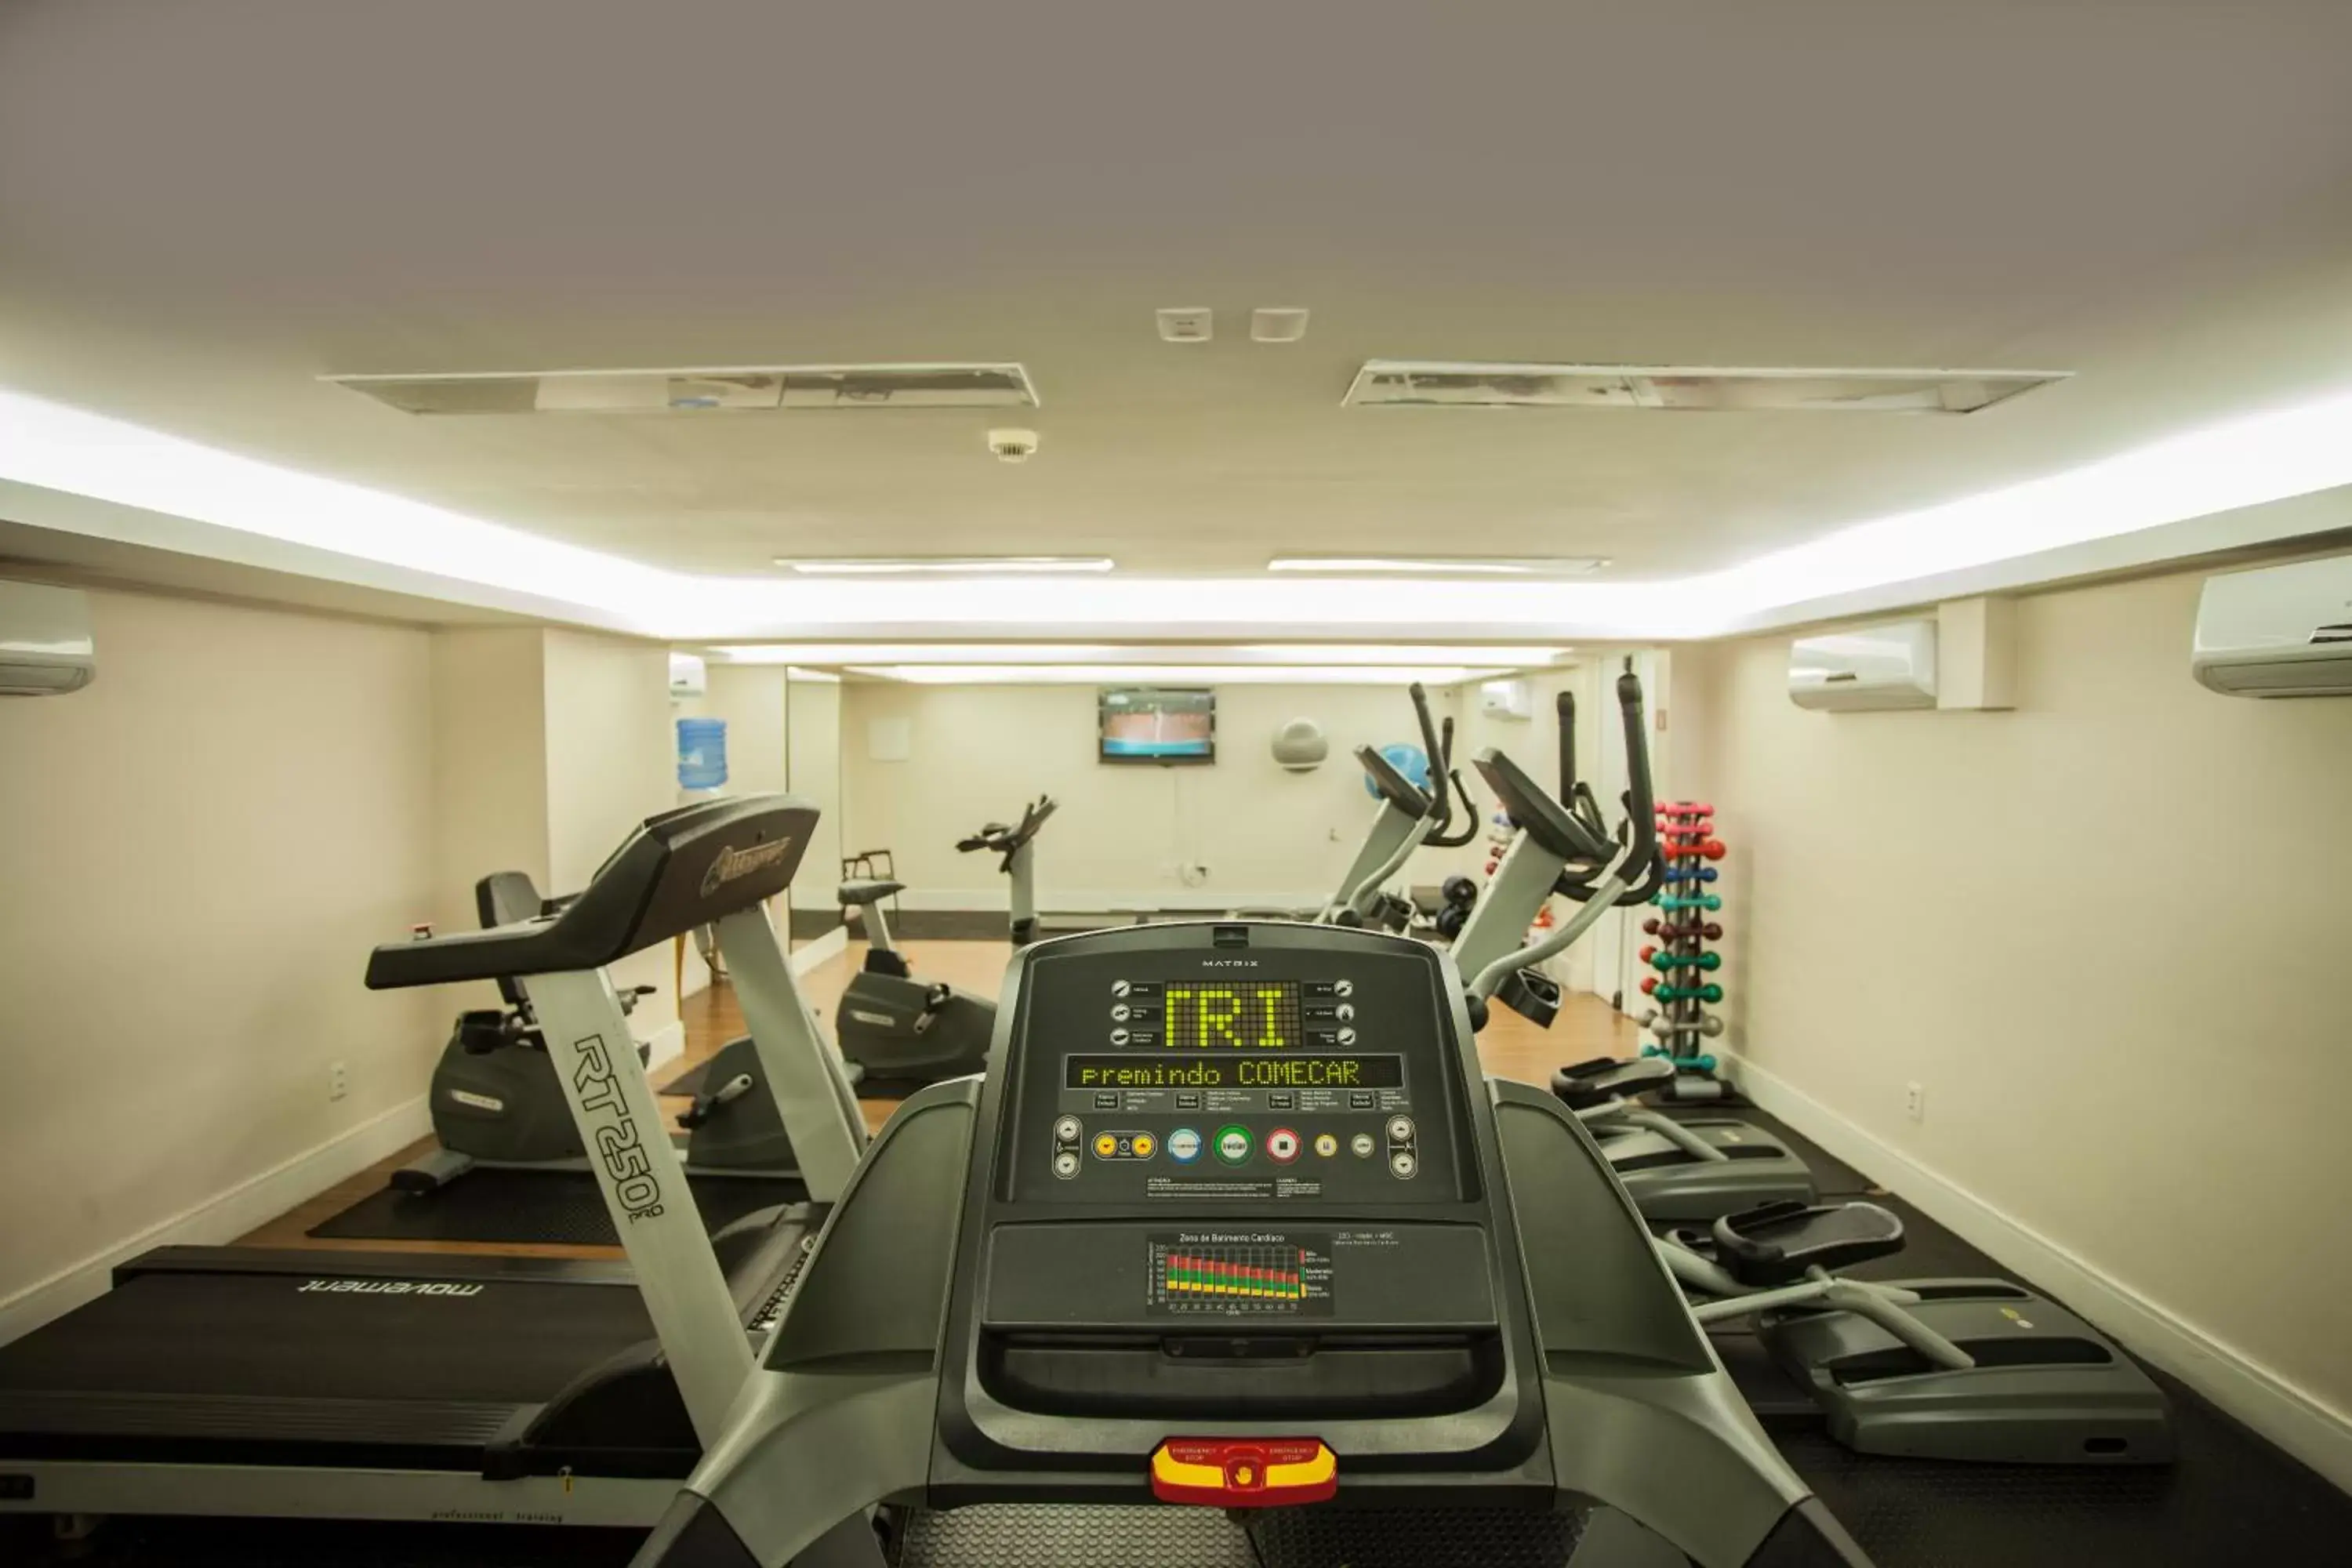 Fitness centre/facilities, Fitness Center/Facilities in Hotel WZ Jardins